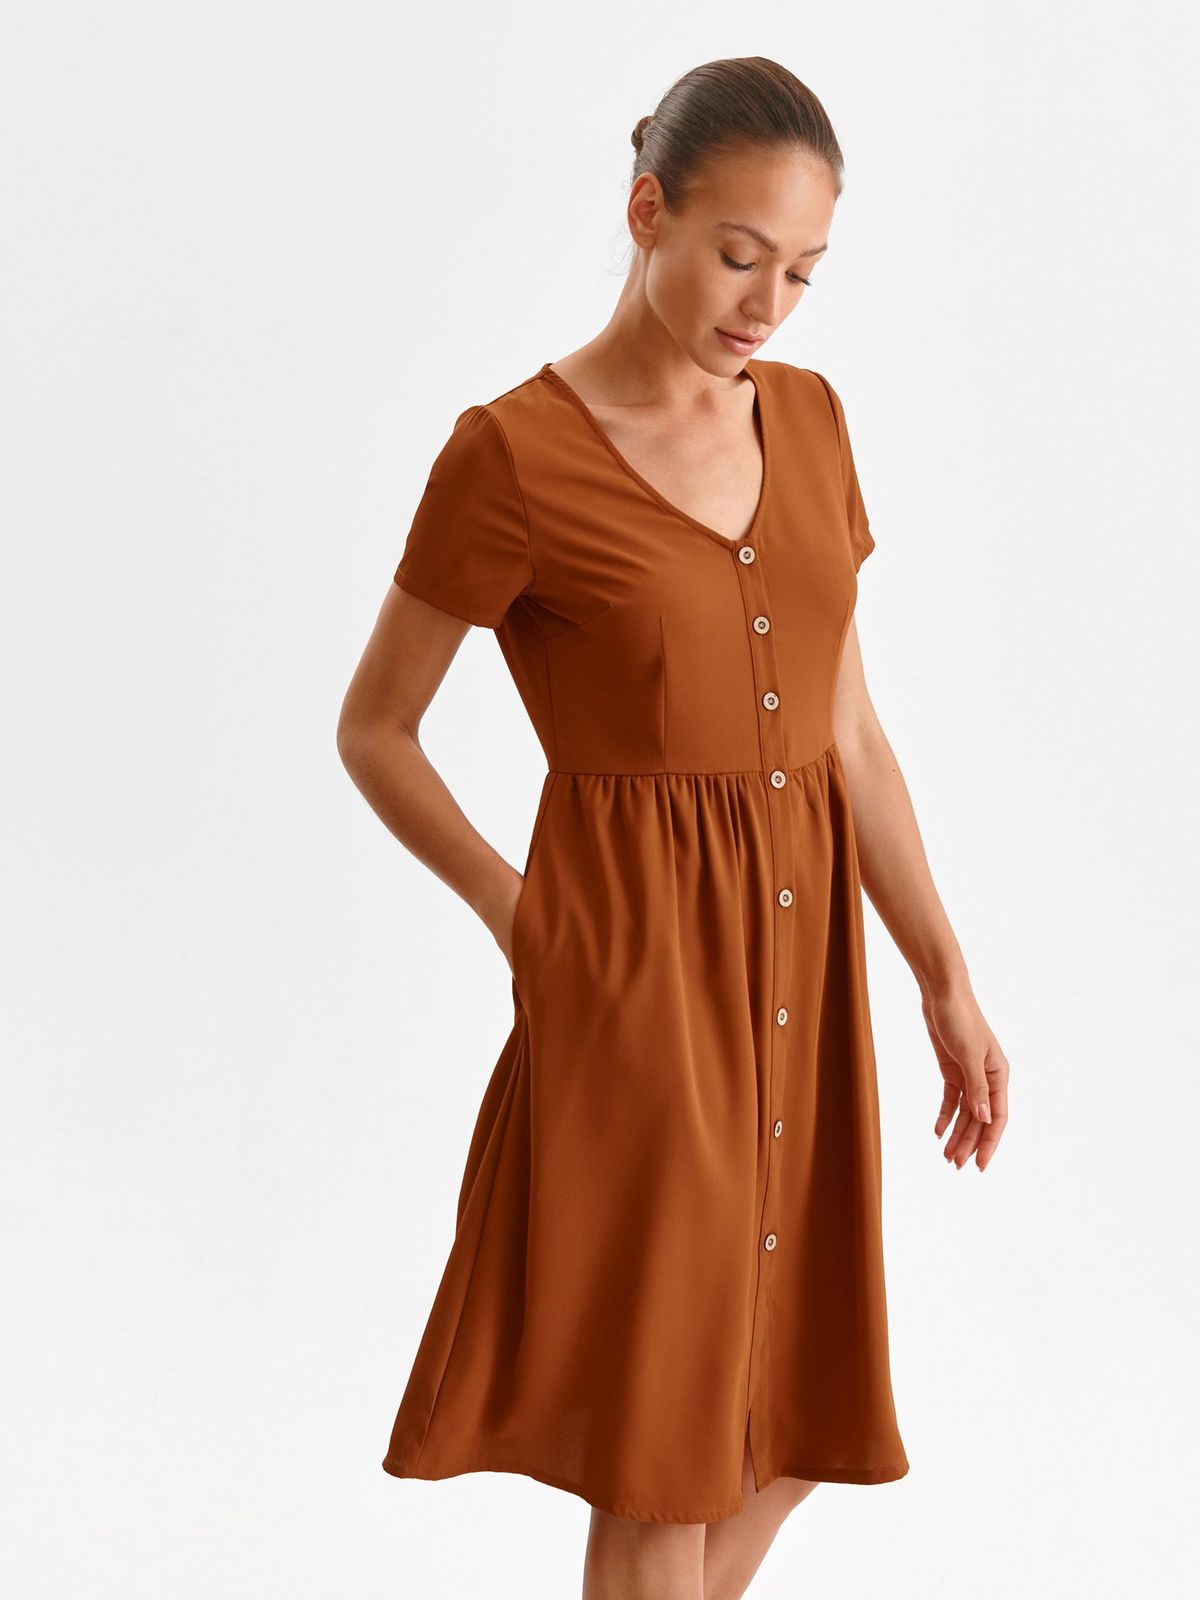 Brown dress midi cloche shirt dress thin fabric